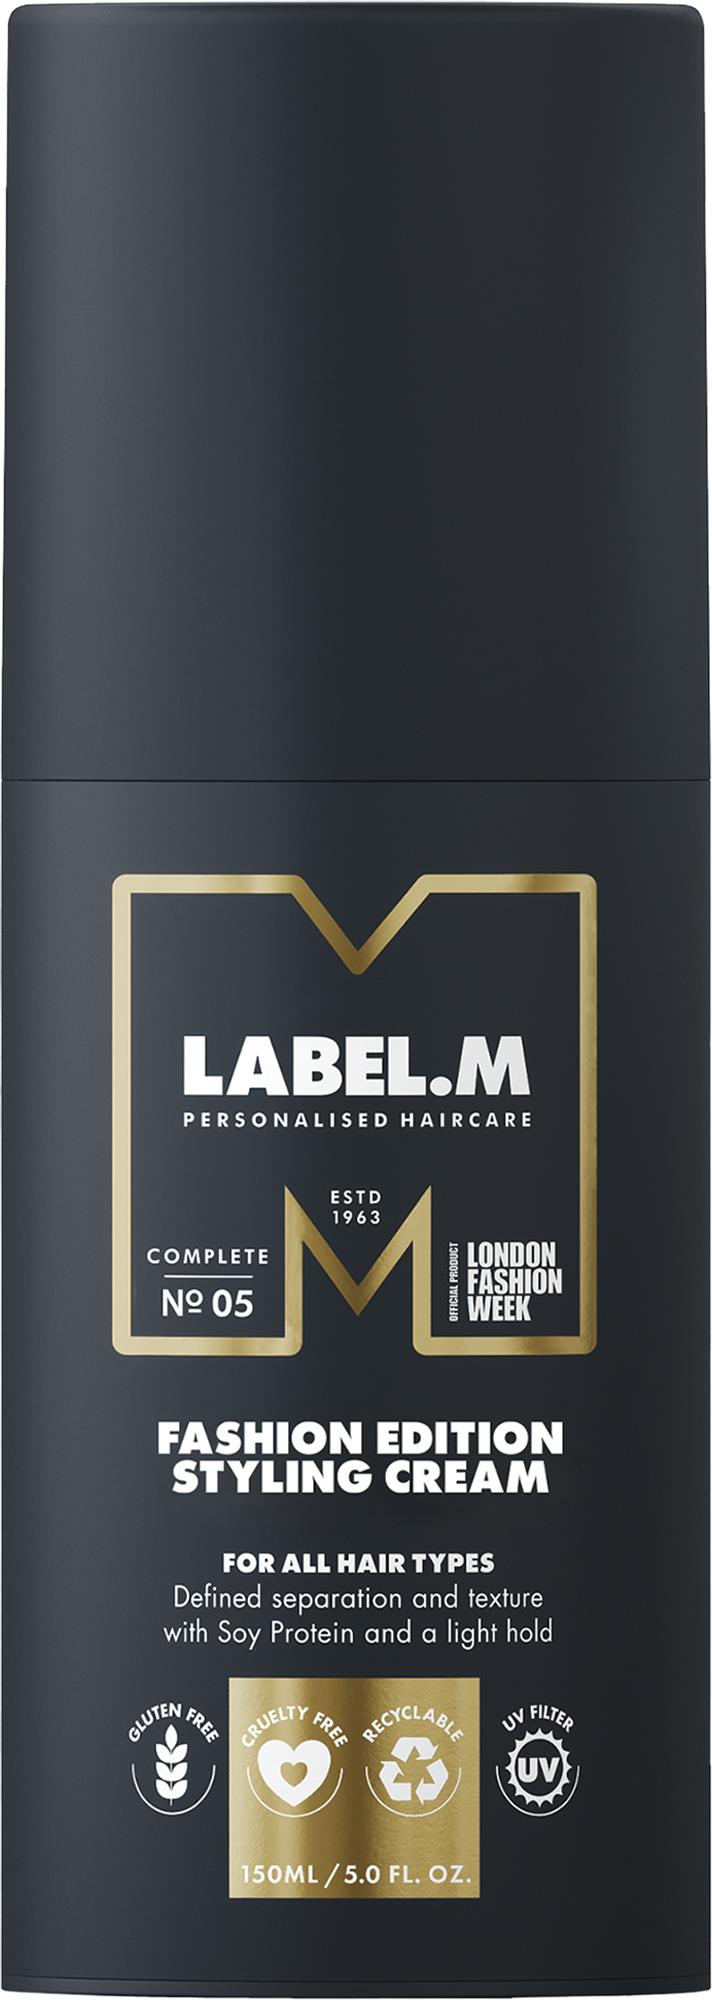 Label.m Fashion Edition hair styling cream 150ml